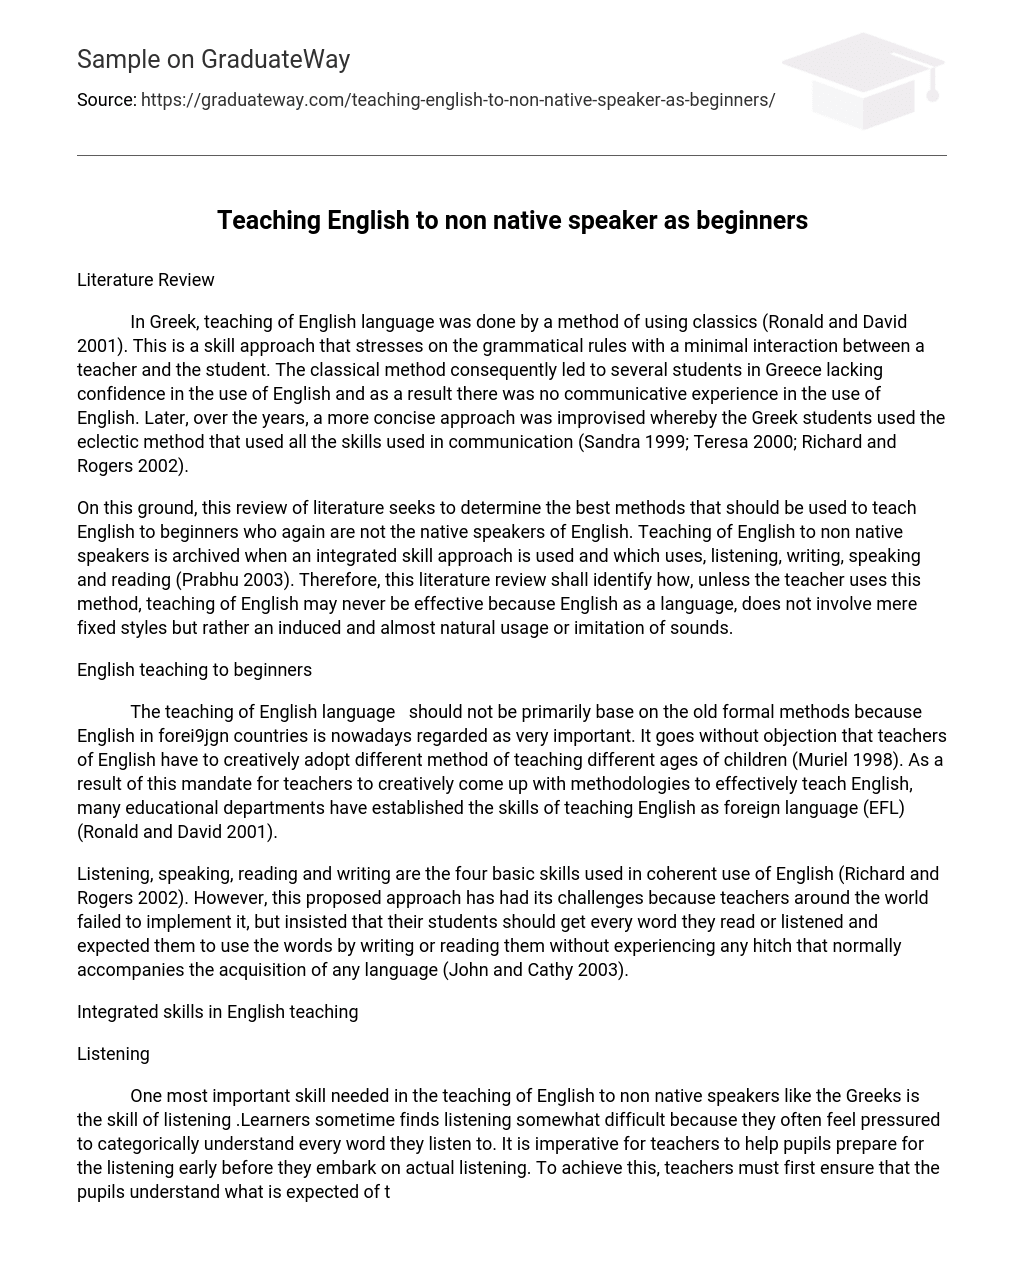 Teaching English to non native speaker as beginners